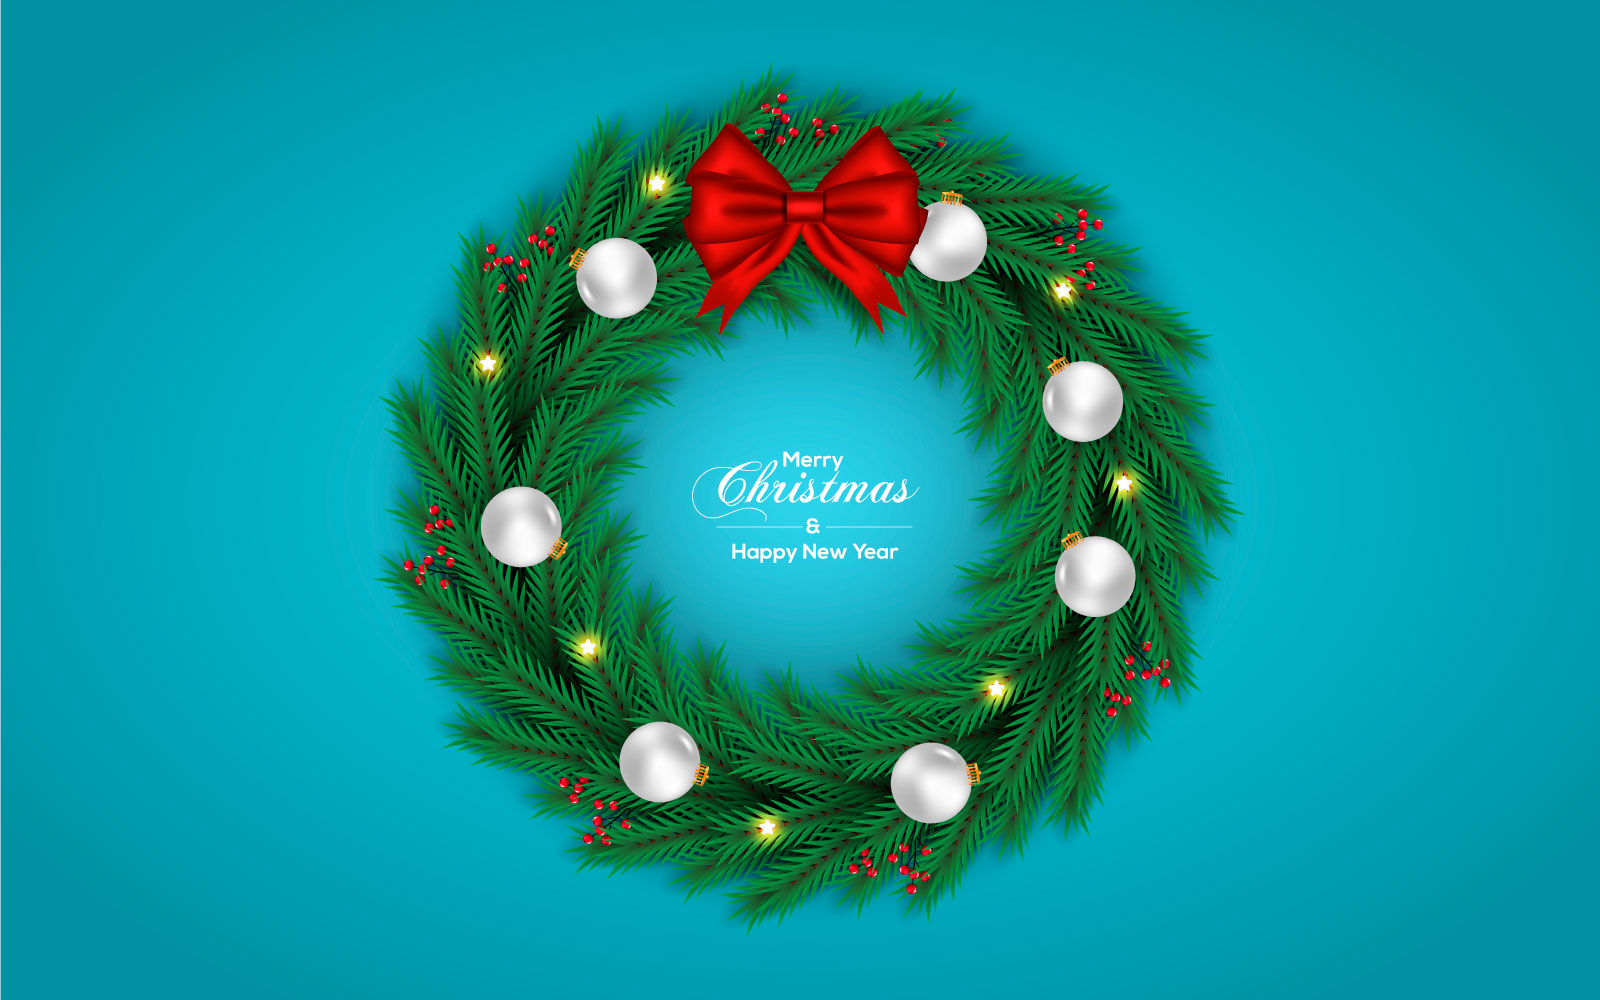 Christmas wreath vector design merry christmas text  garland elements